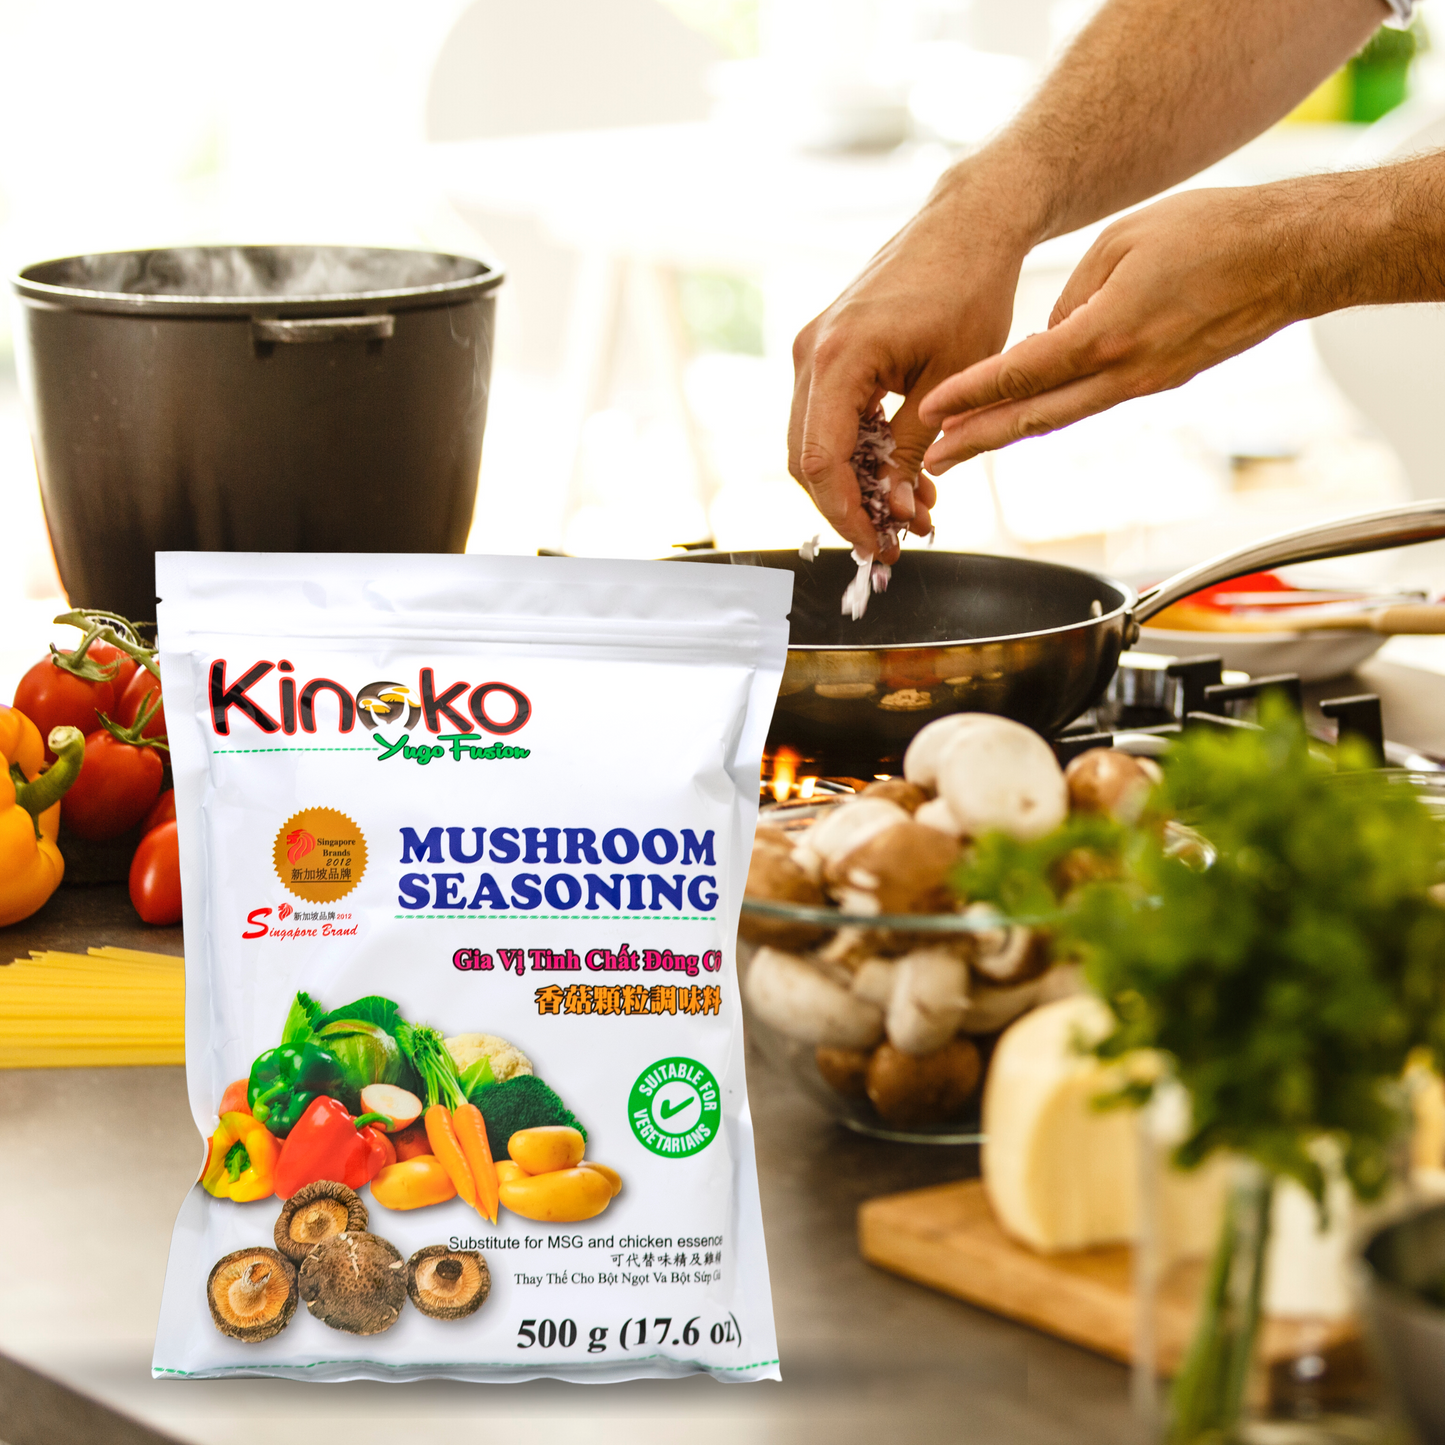 Kinoko Yugo Fusion Mushroom Seasoning 2 PACK